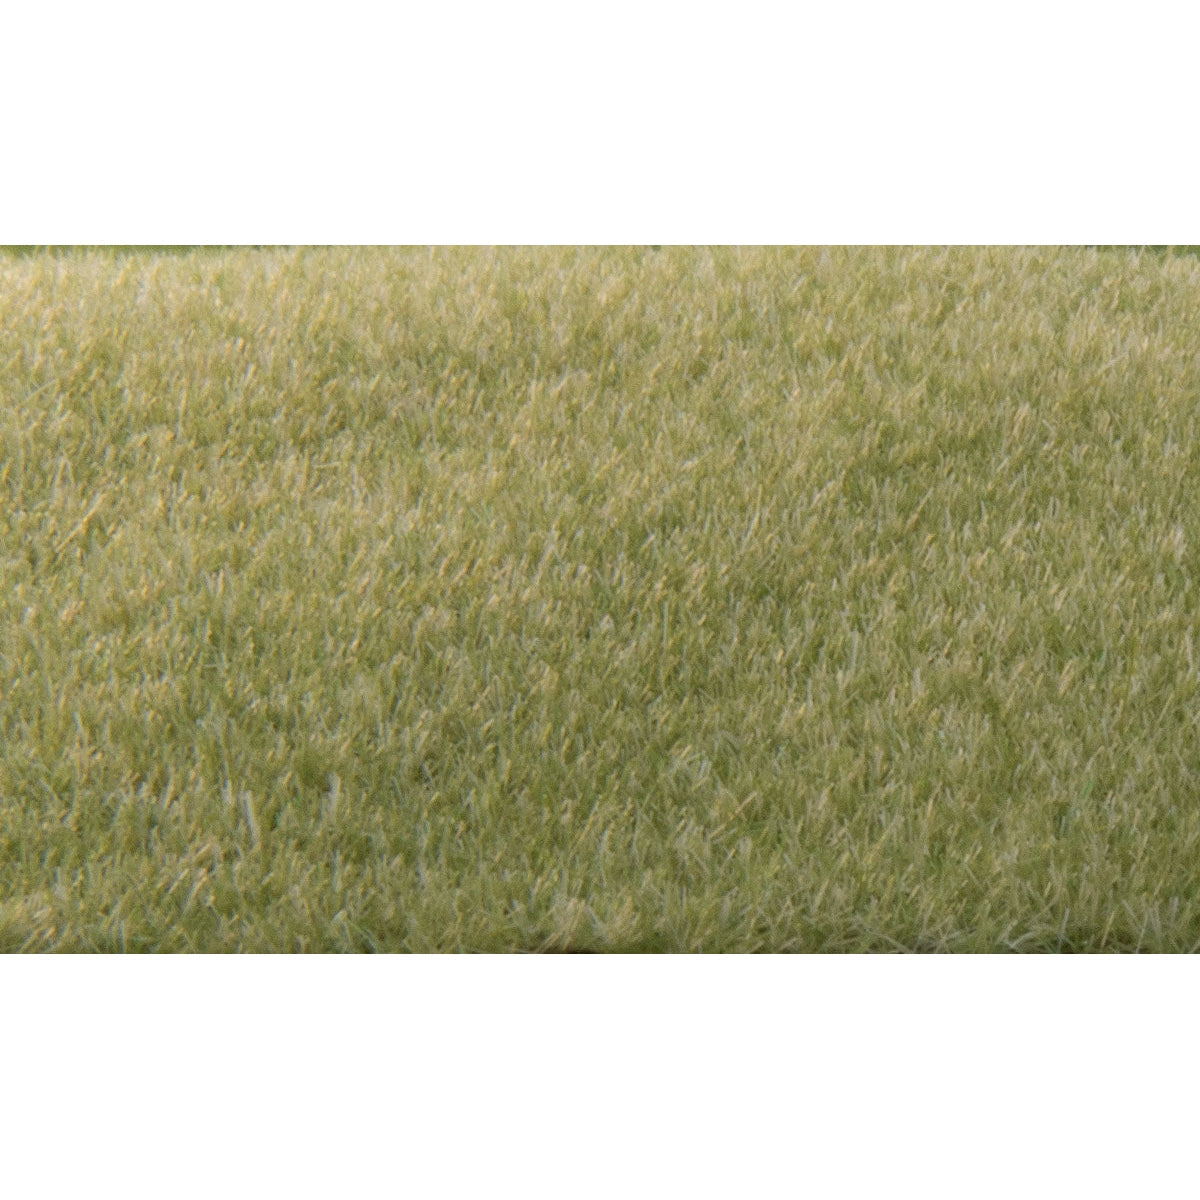 Woodland Scenics Static Grass Light Green 2mm